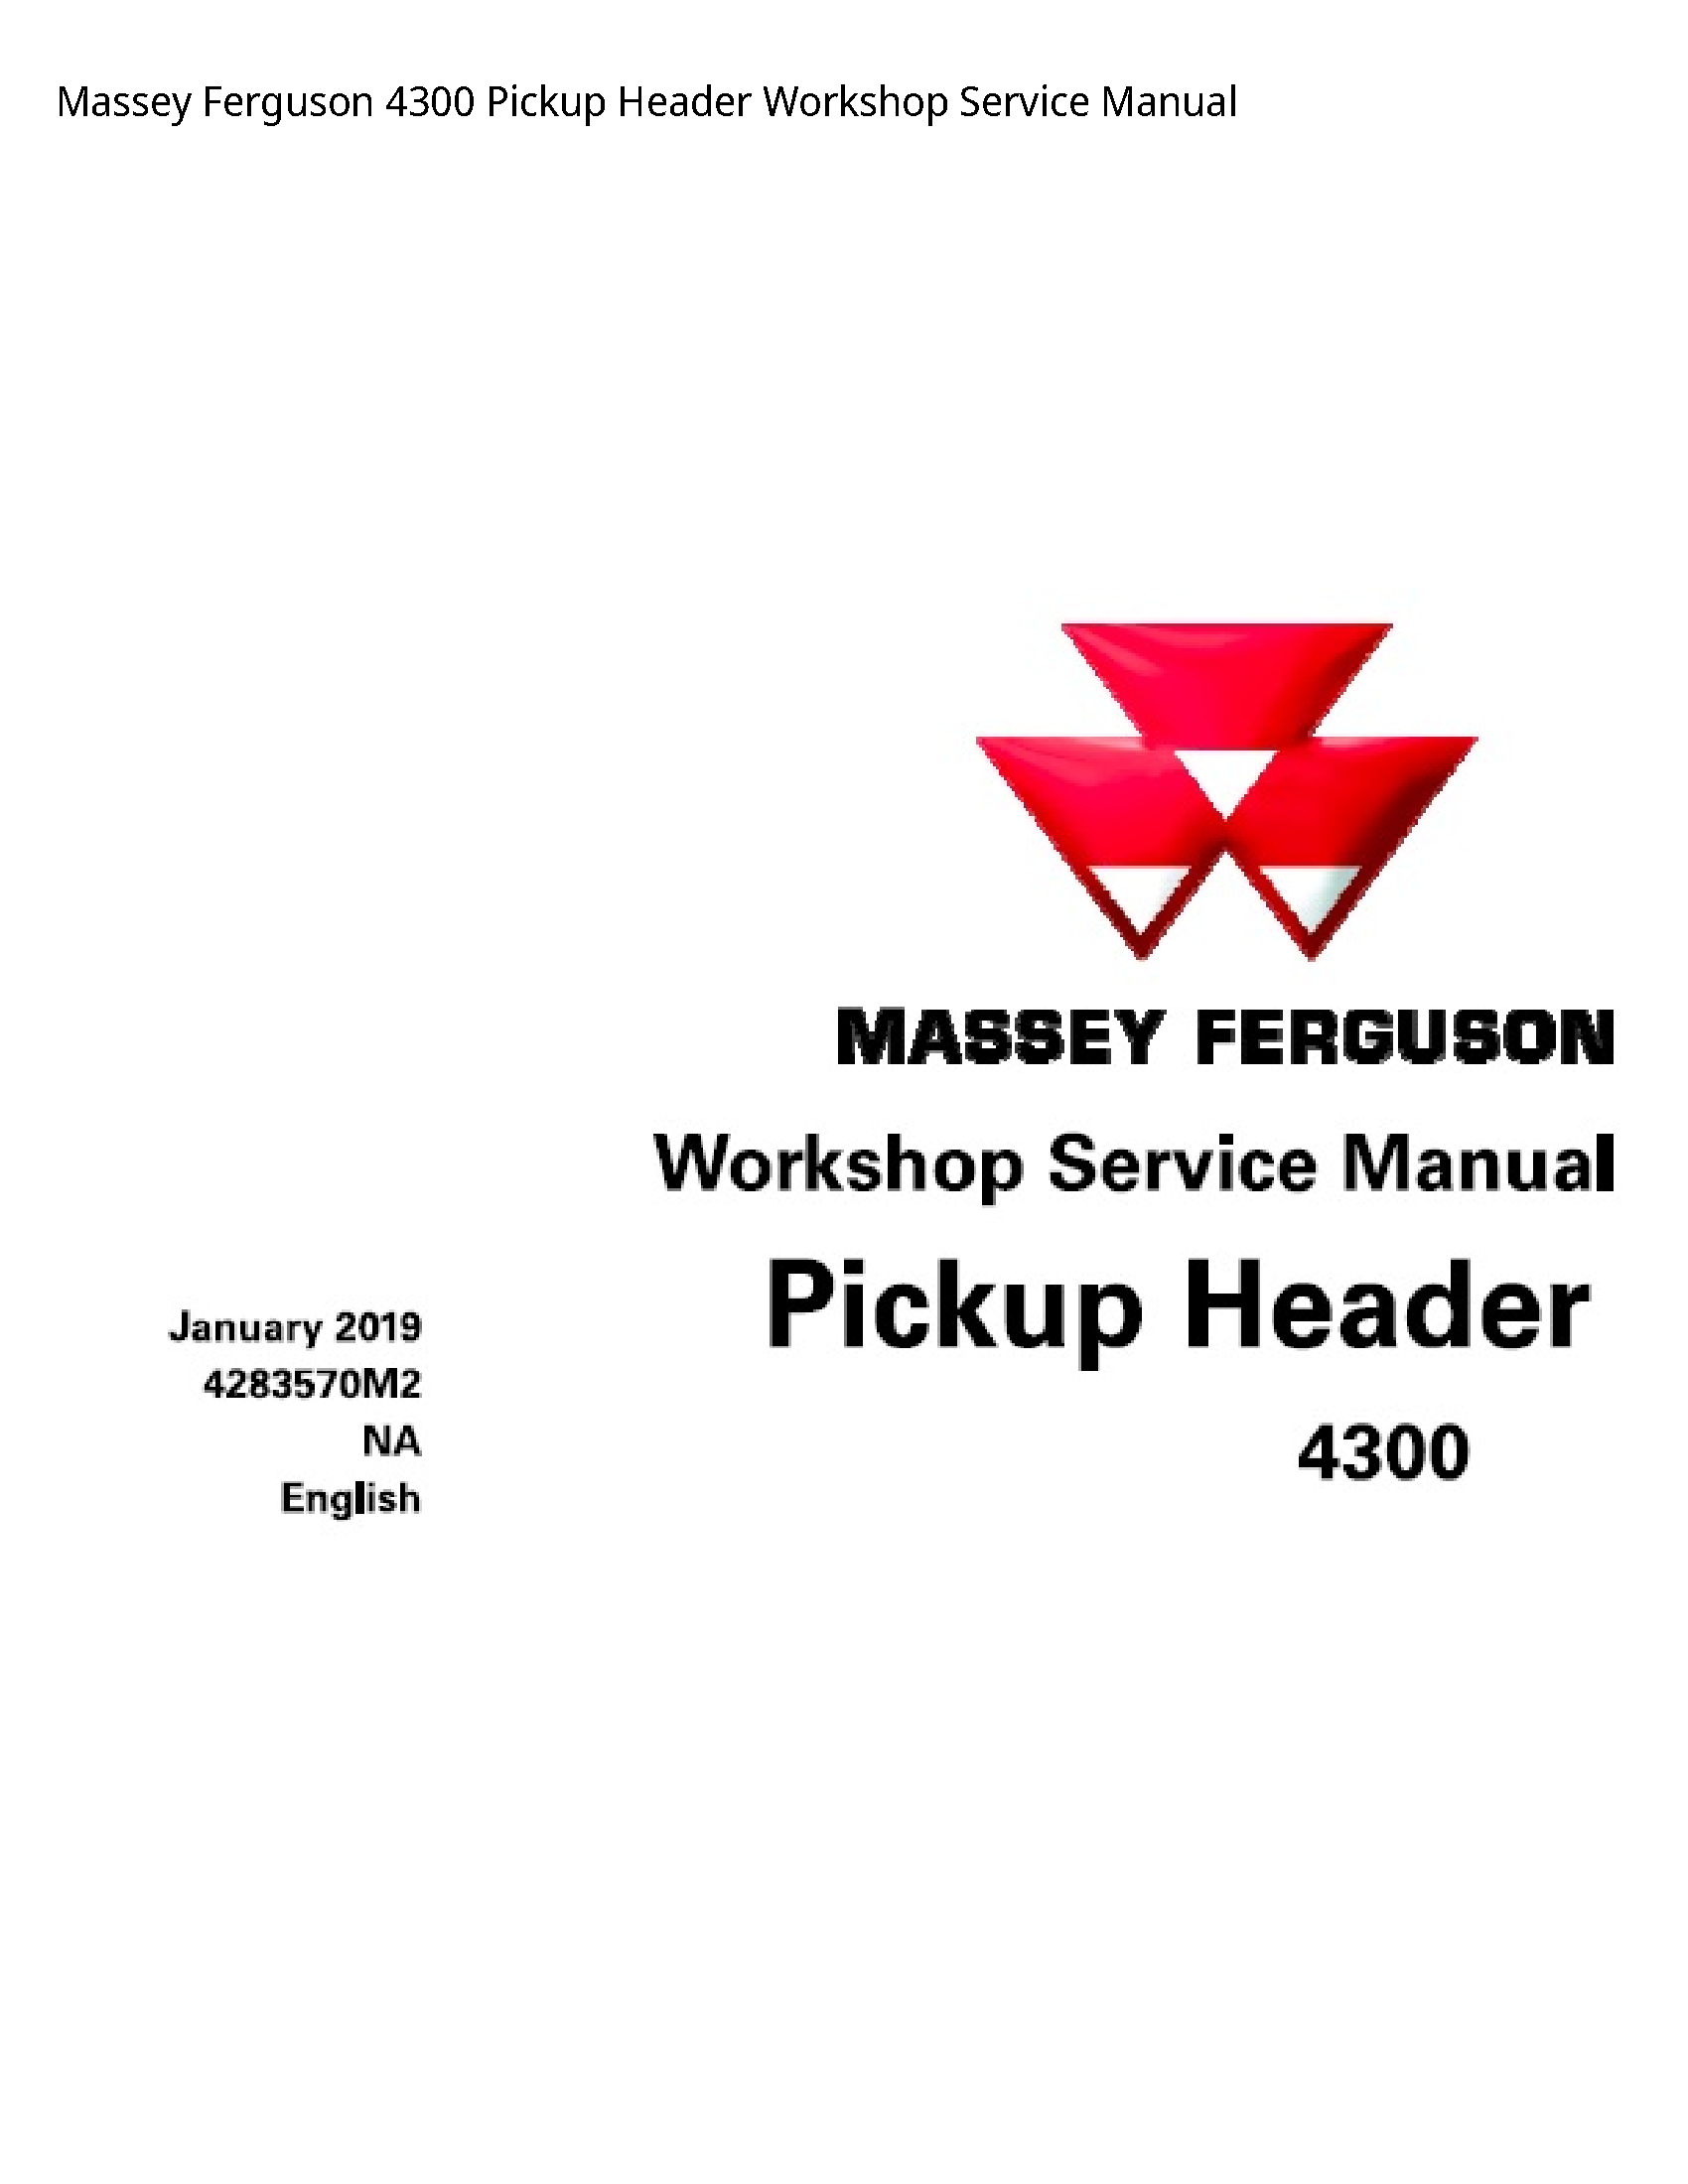 Massey Ferguson 4300 Pickup Header Service manual